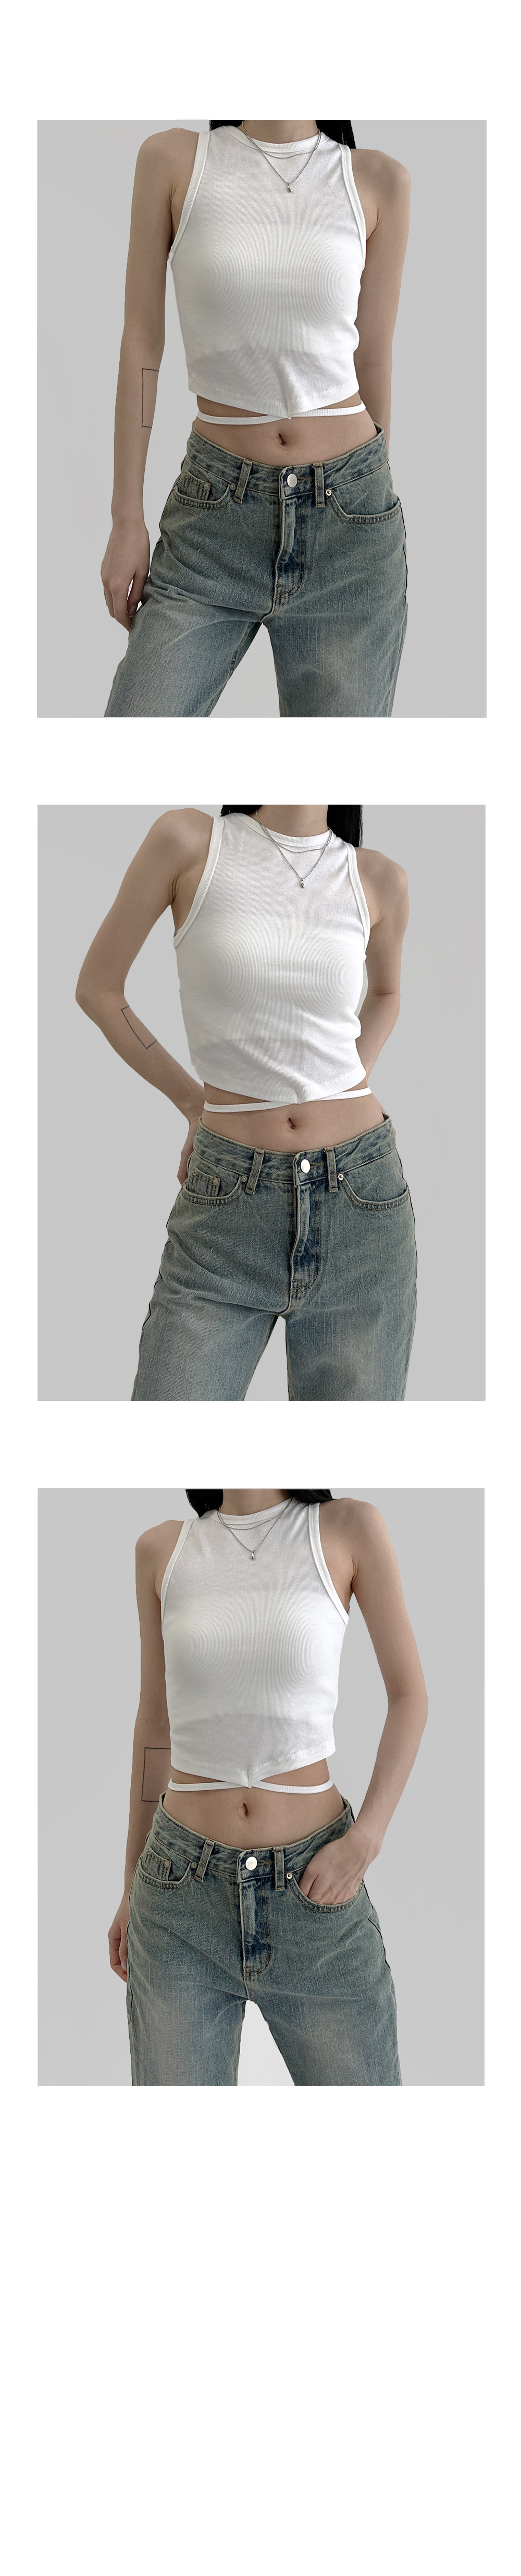 suspenders skirt/pants white color image-S1L13